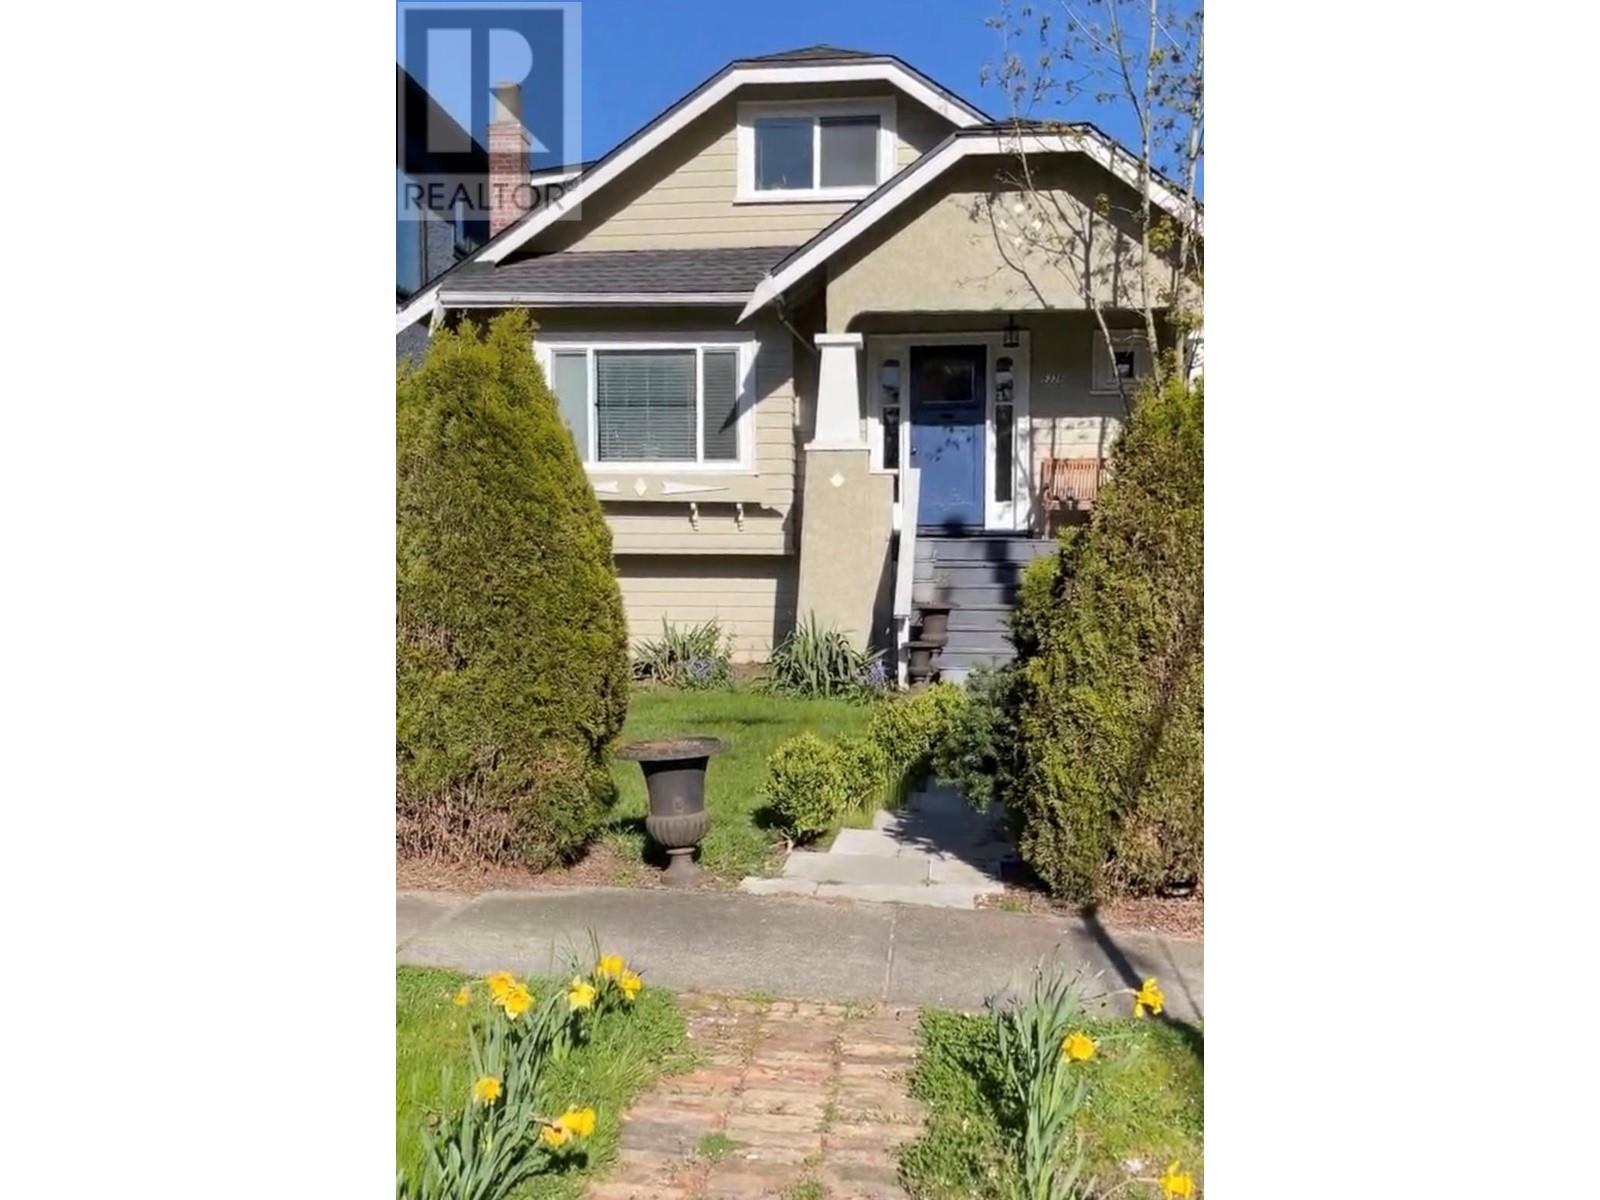 4 Bedroom Residential Home For Sale | 6338 Vine Street | Vancouver | V6M4B1